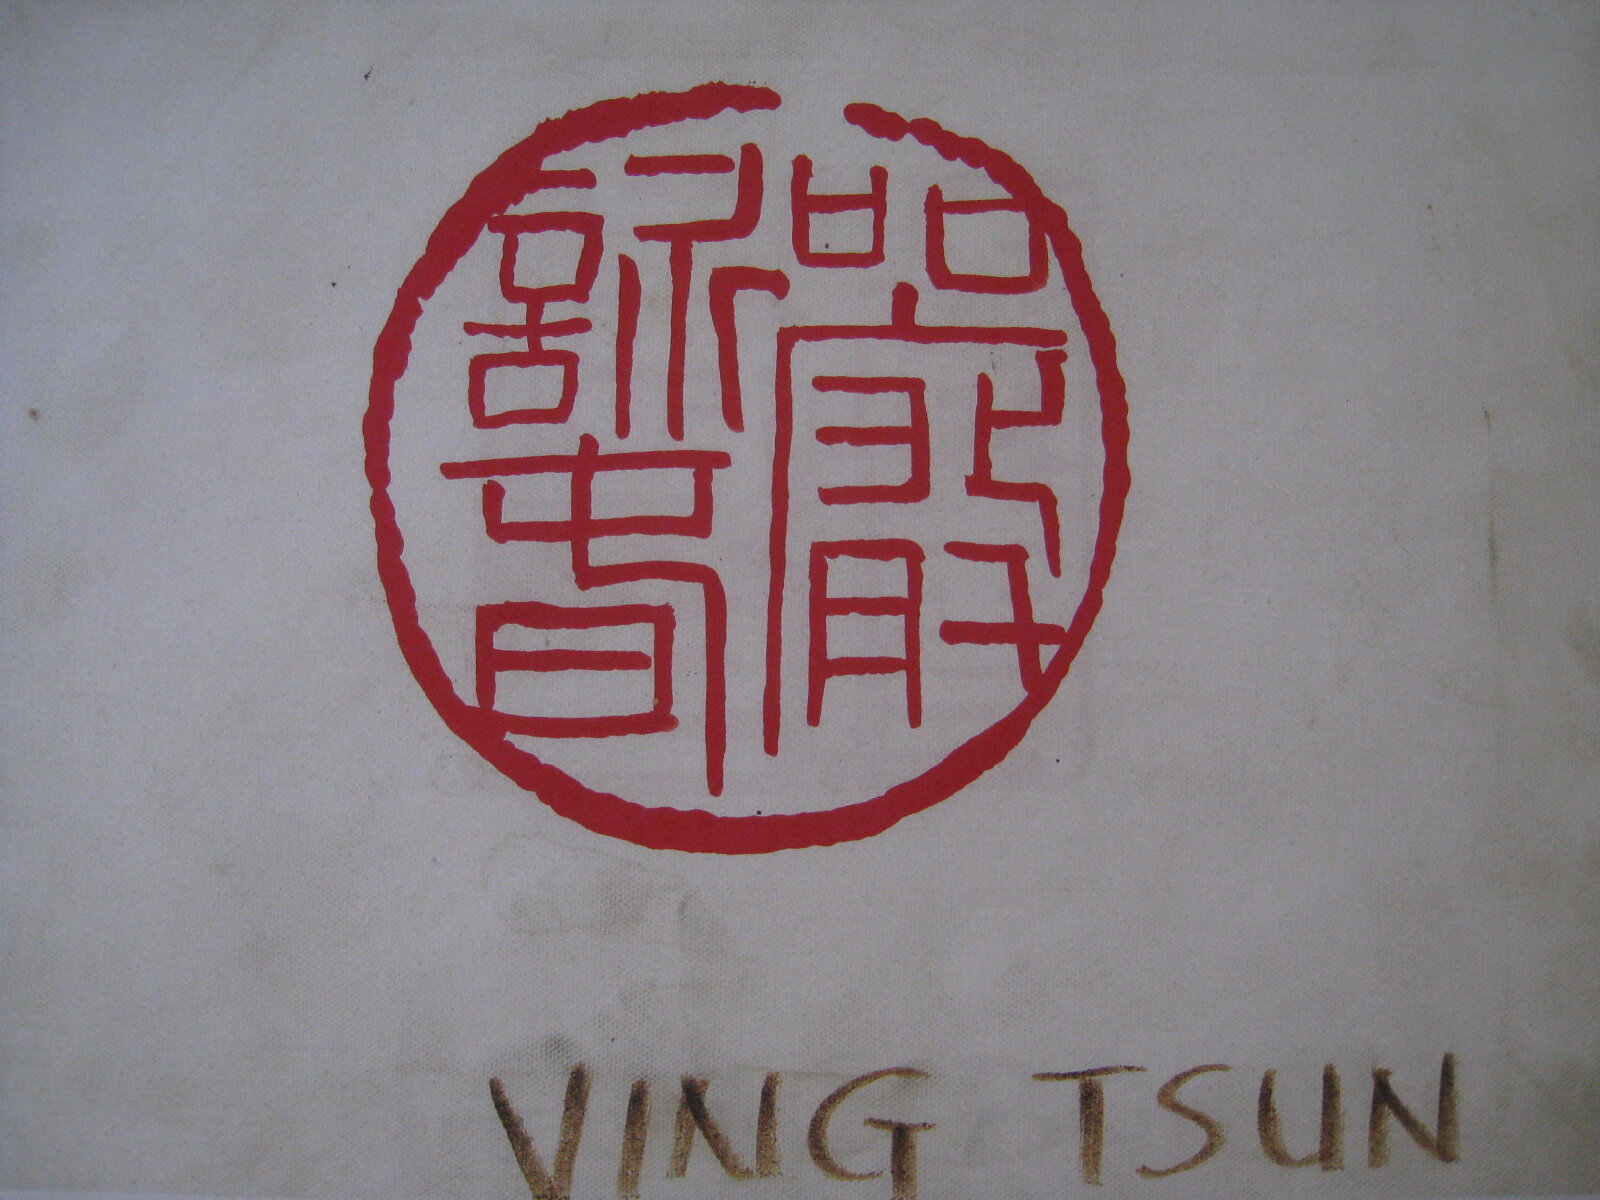 Ving Tsun (Wing Chun)